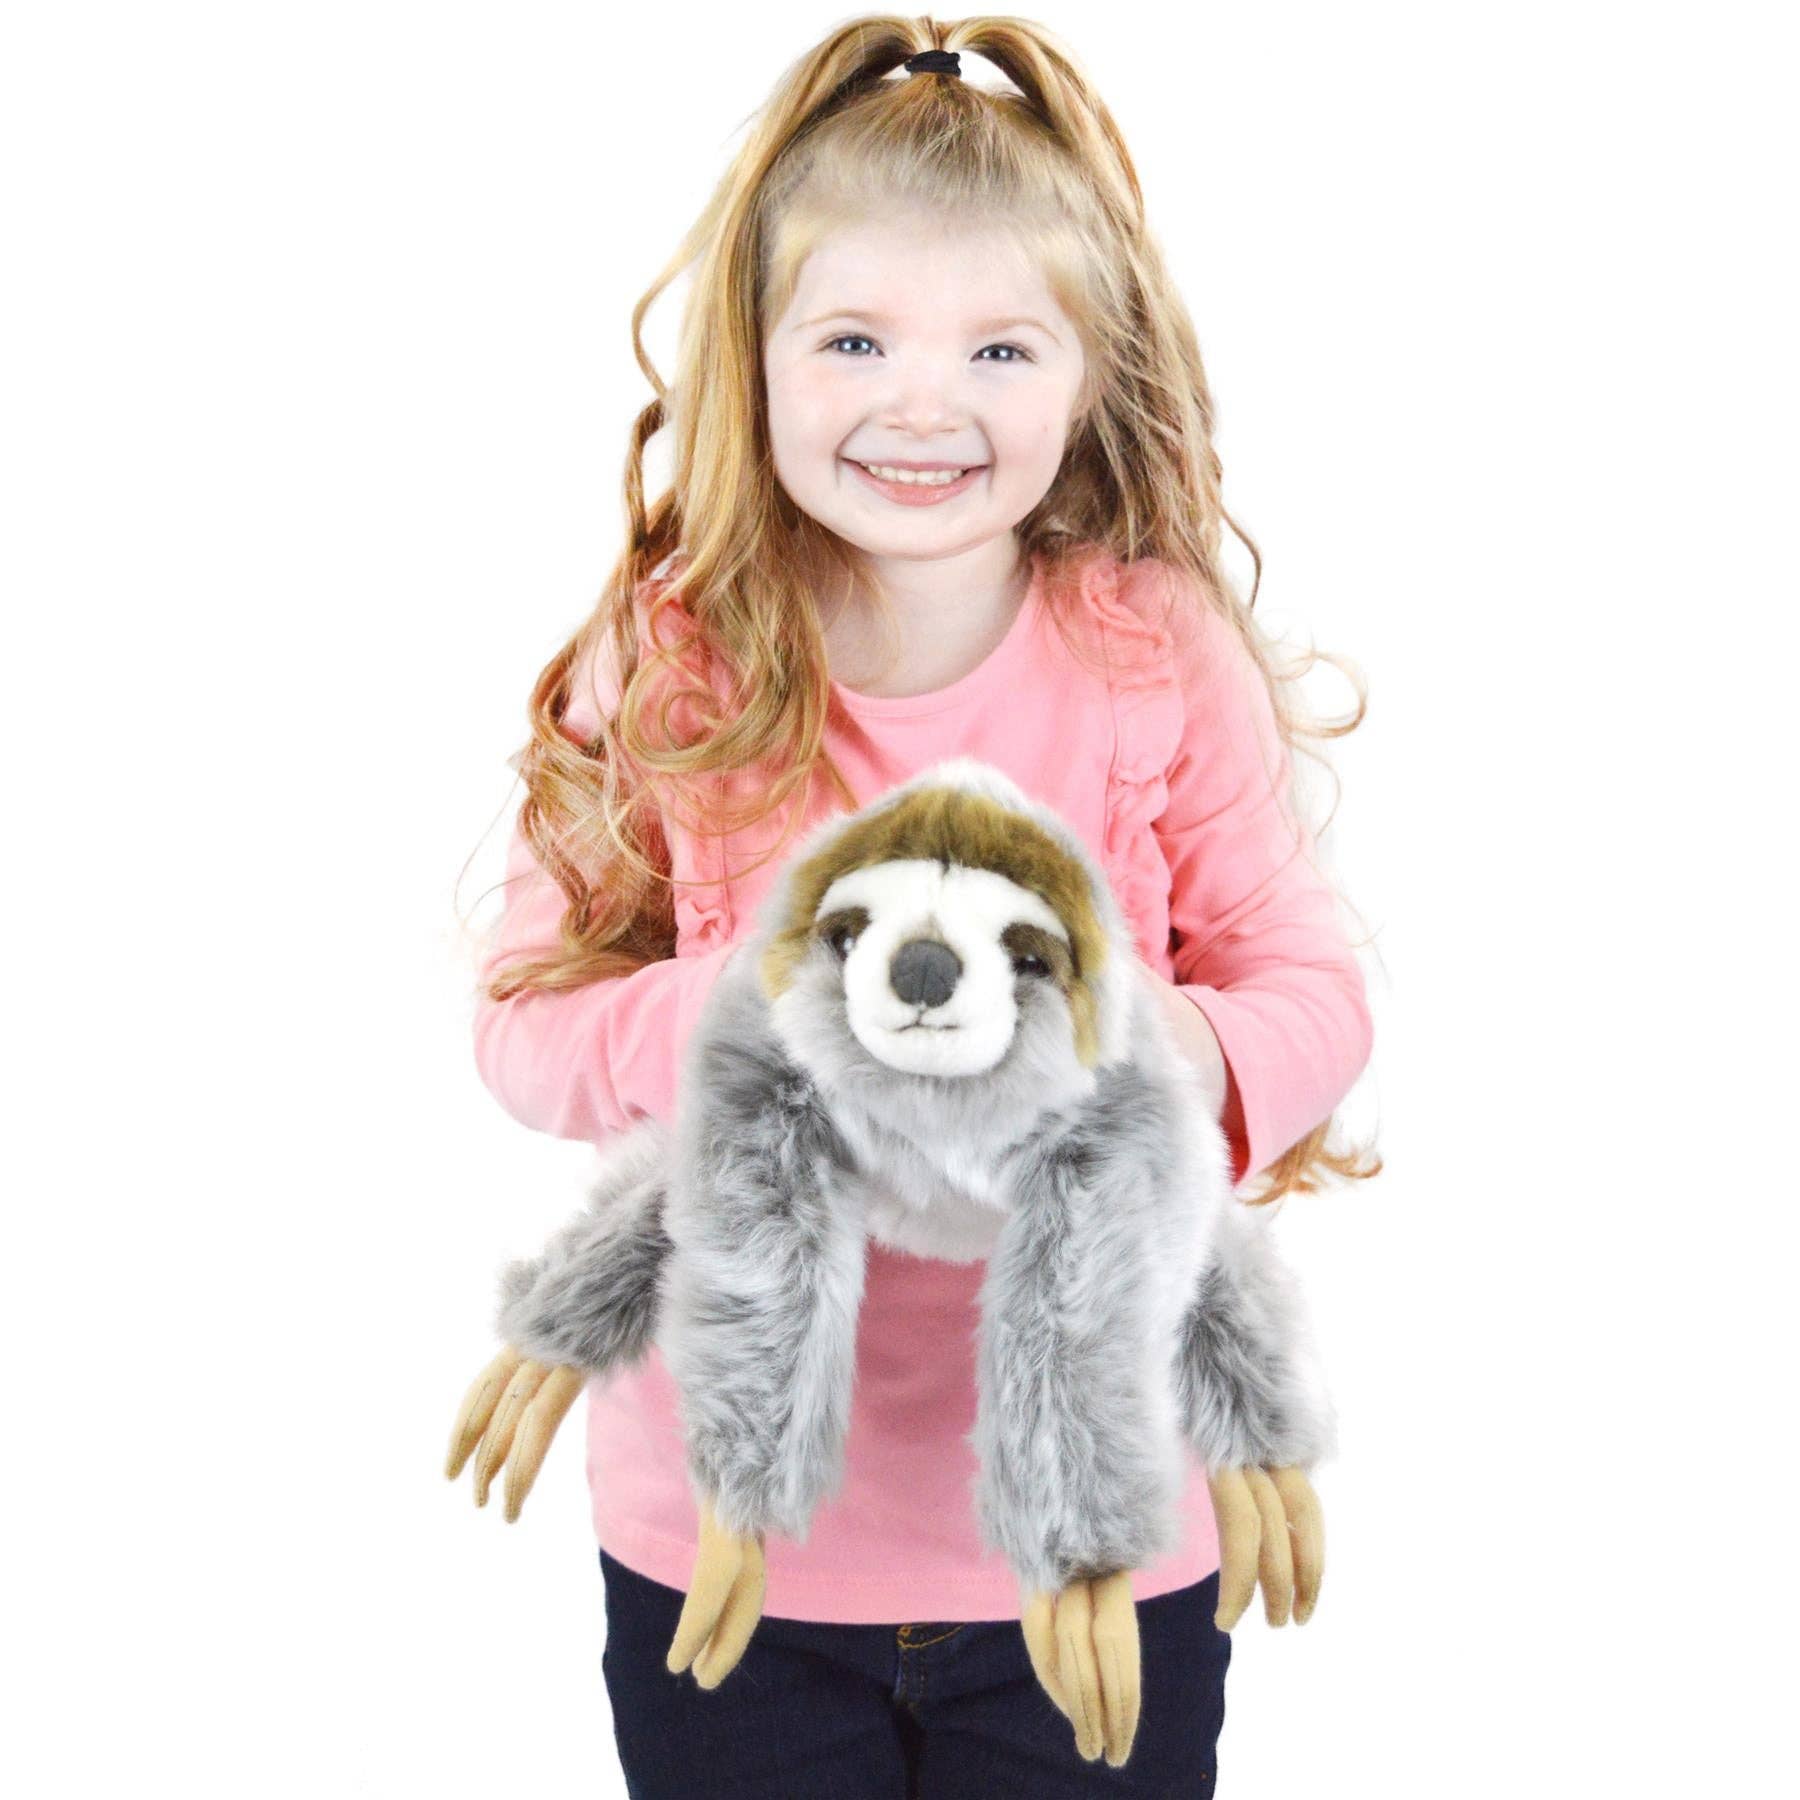 Siggy The Threetoed Sloth Baby | 9 Inch Stuffed Animal Plush